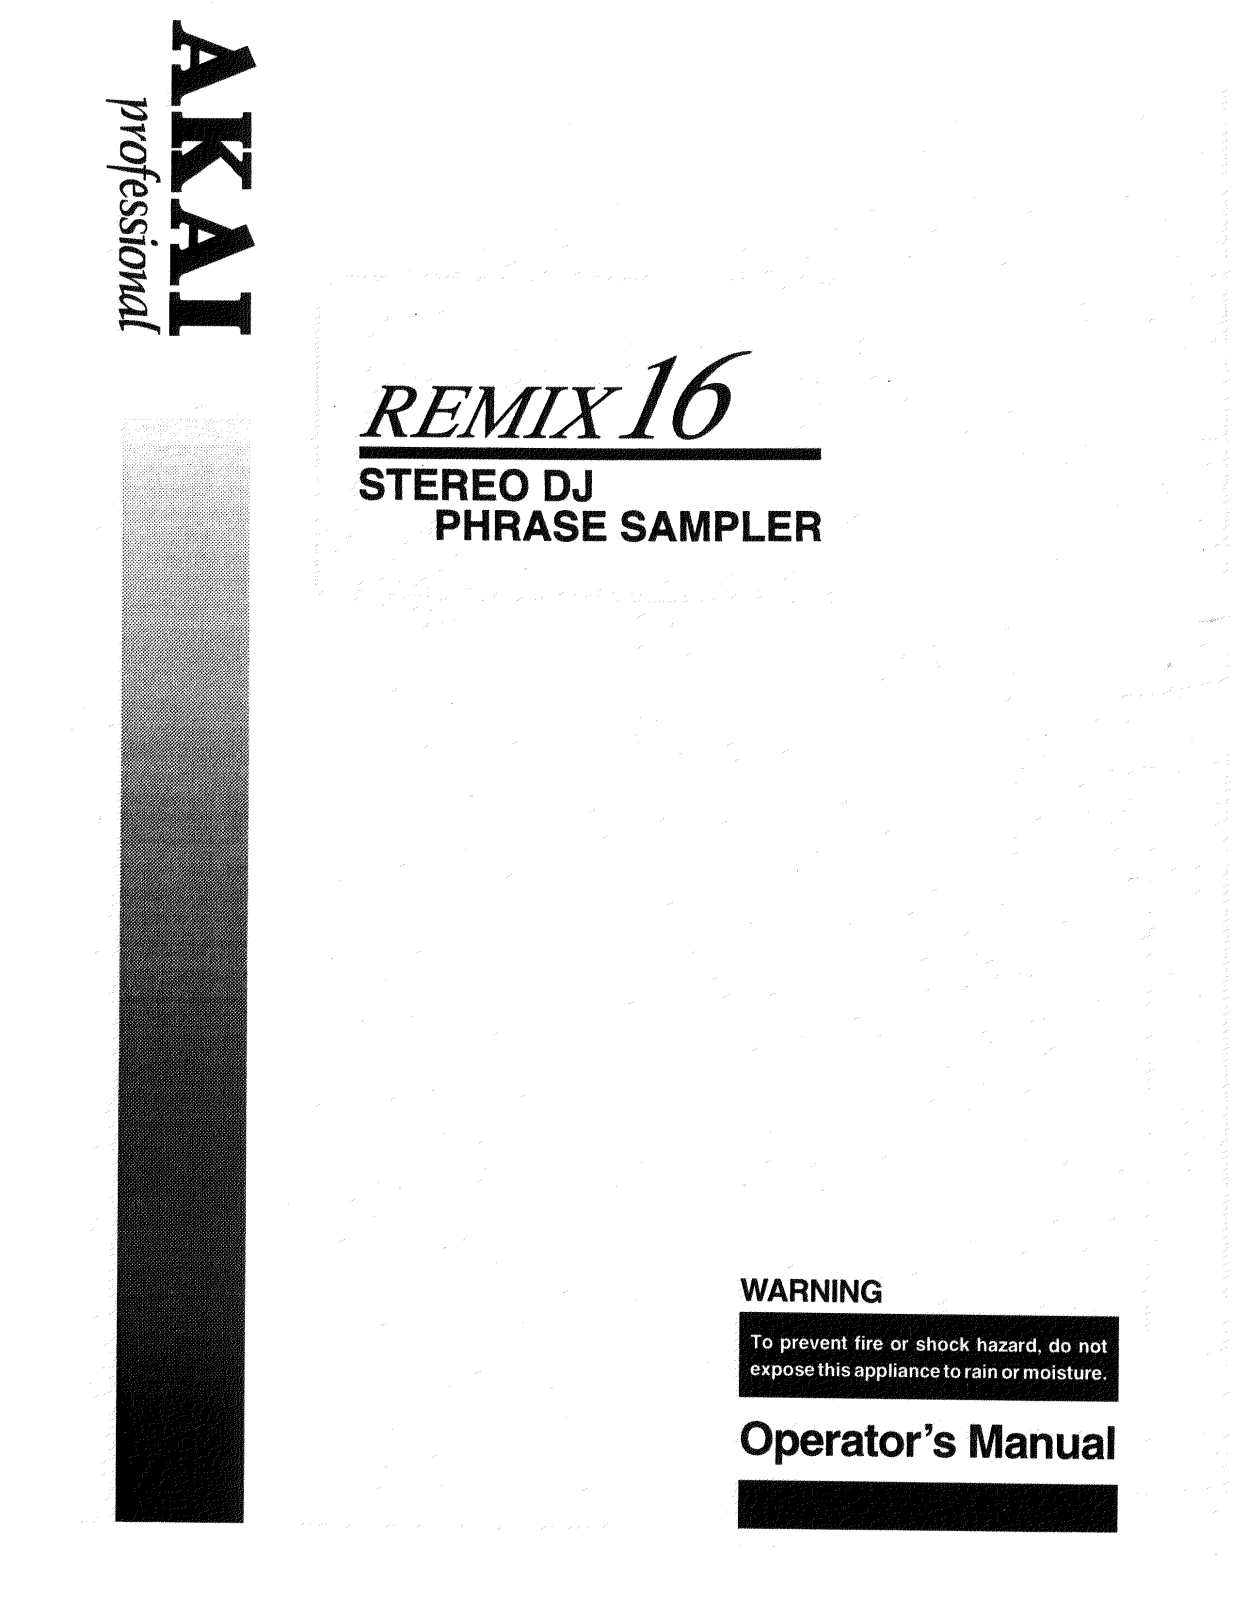 Akai REMIX 16 Operator's Manual